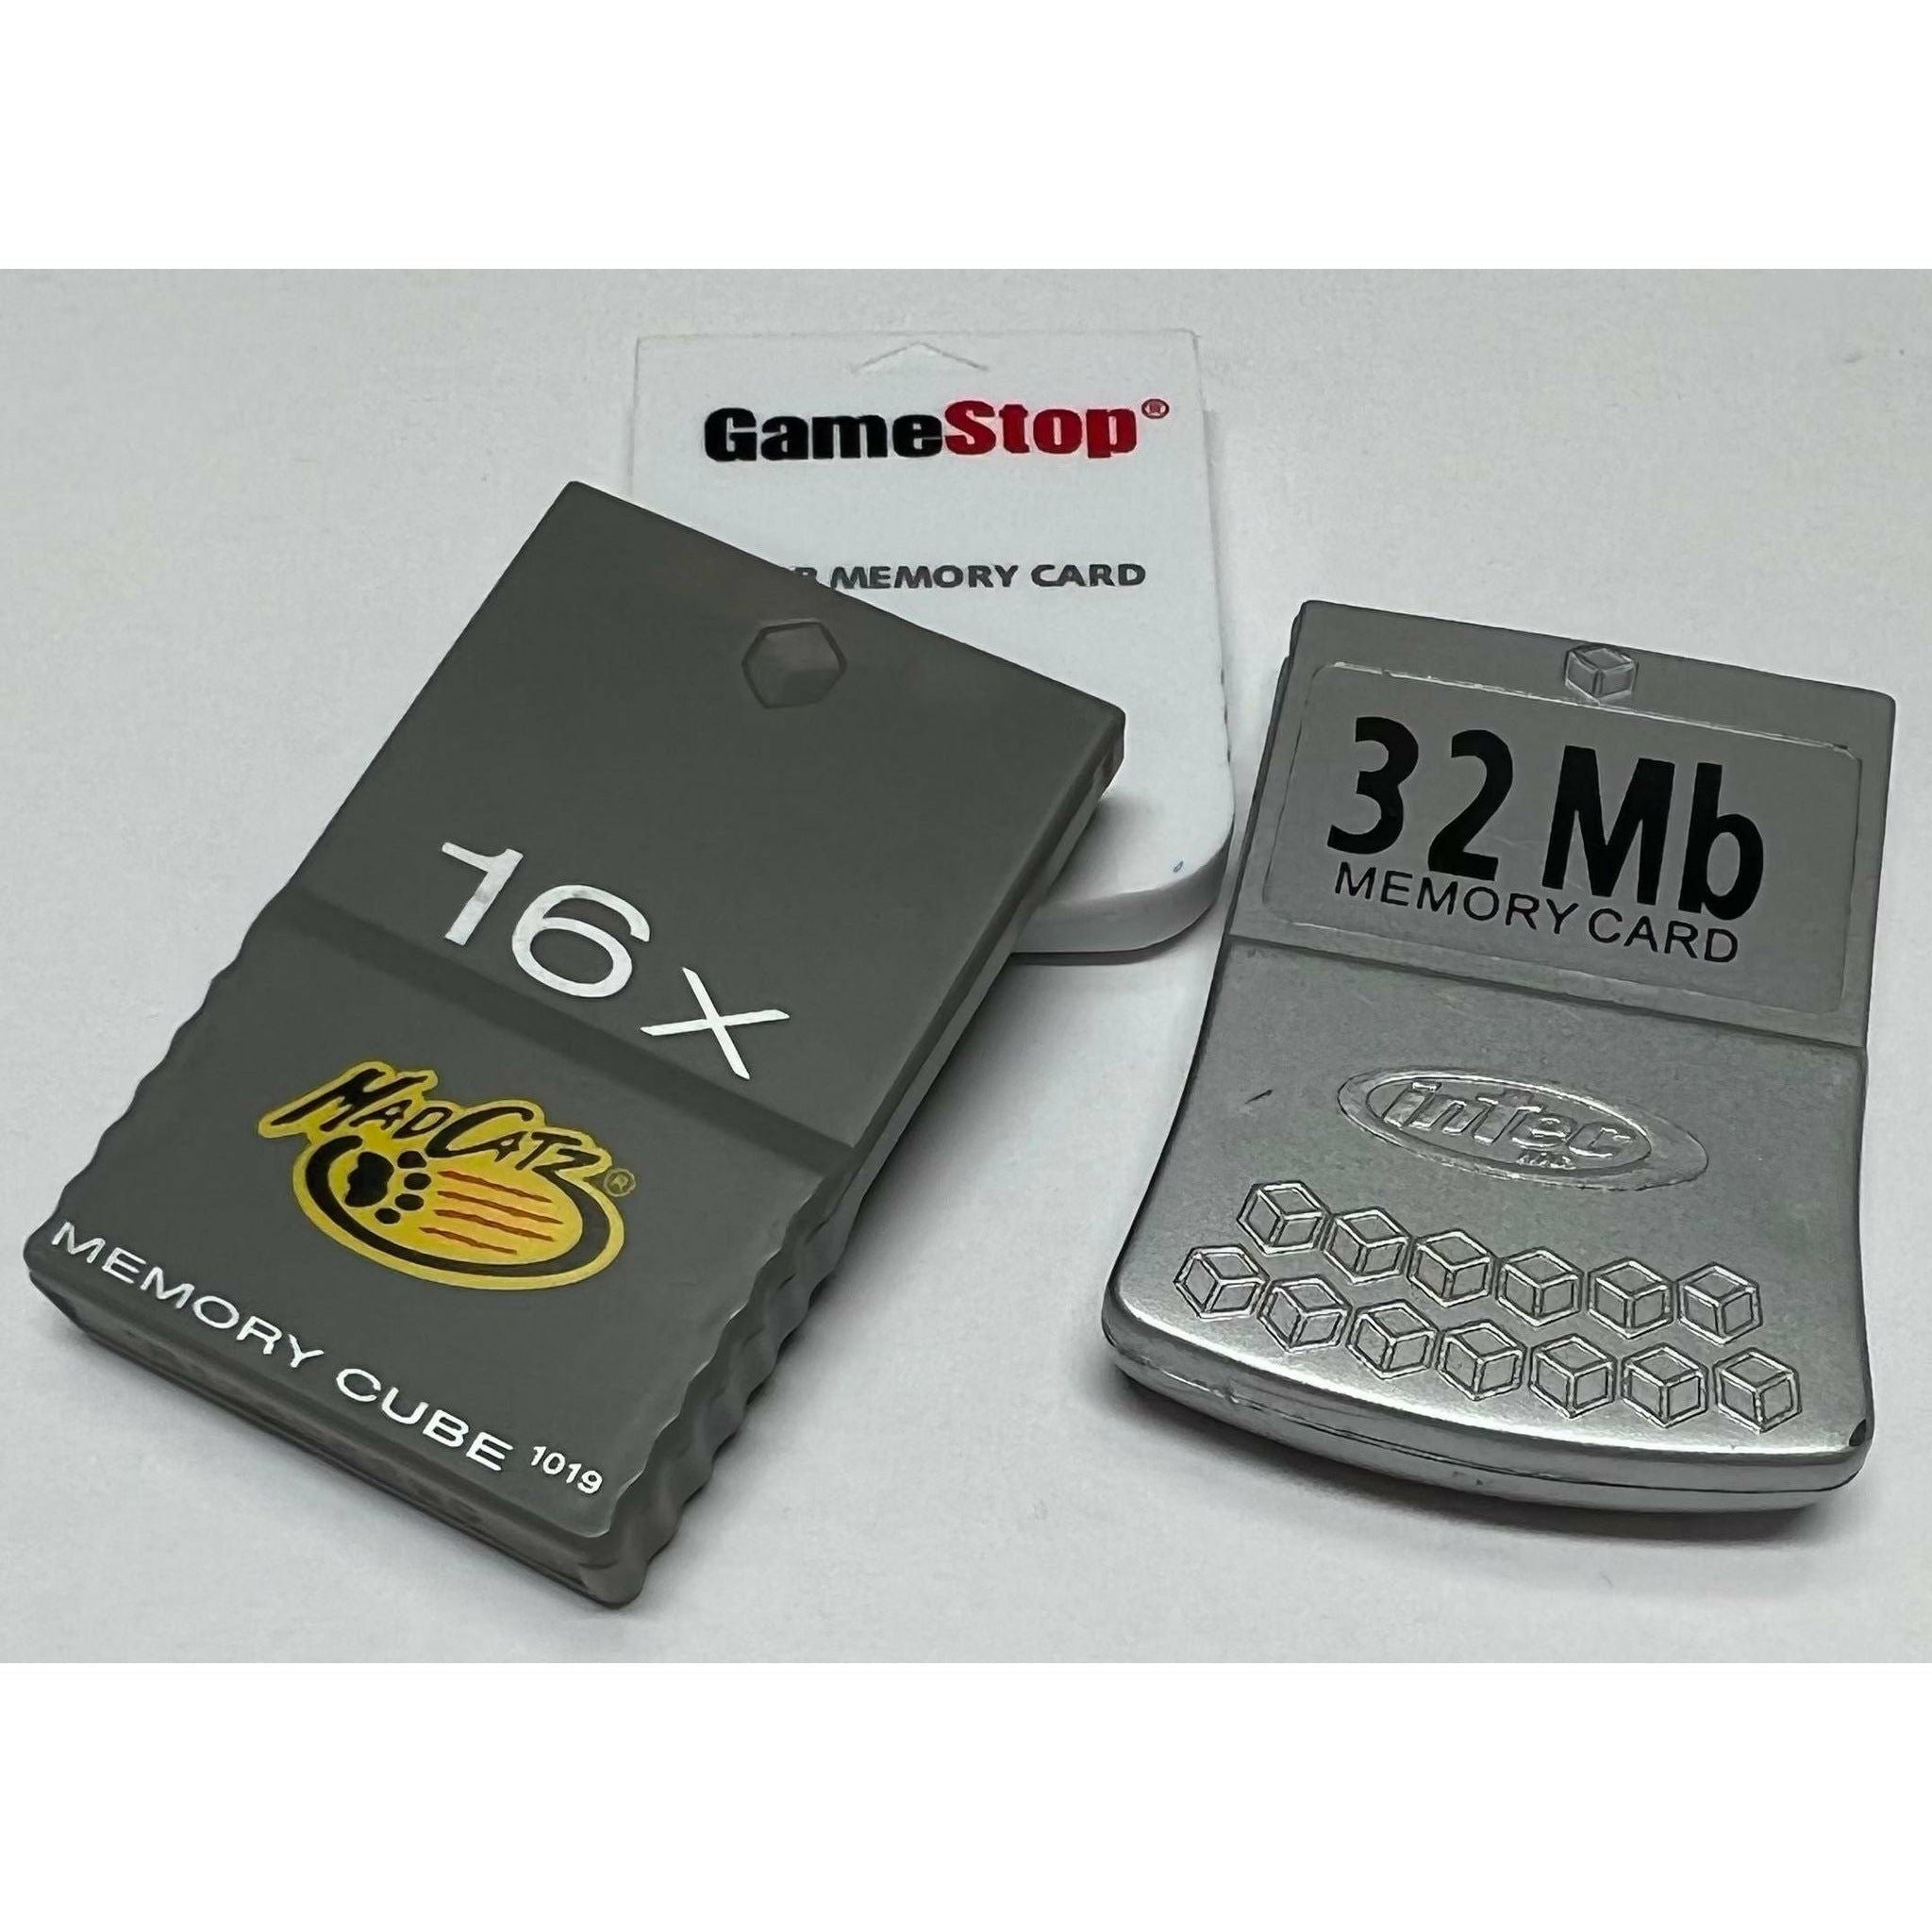 Nintendo GameCube Non-OEM Memory Cards